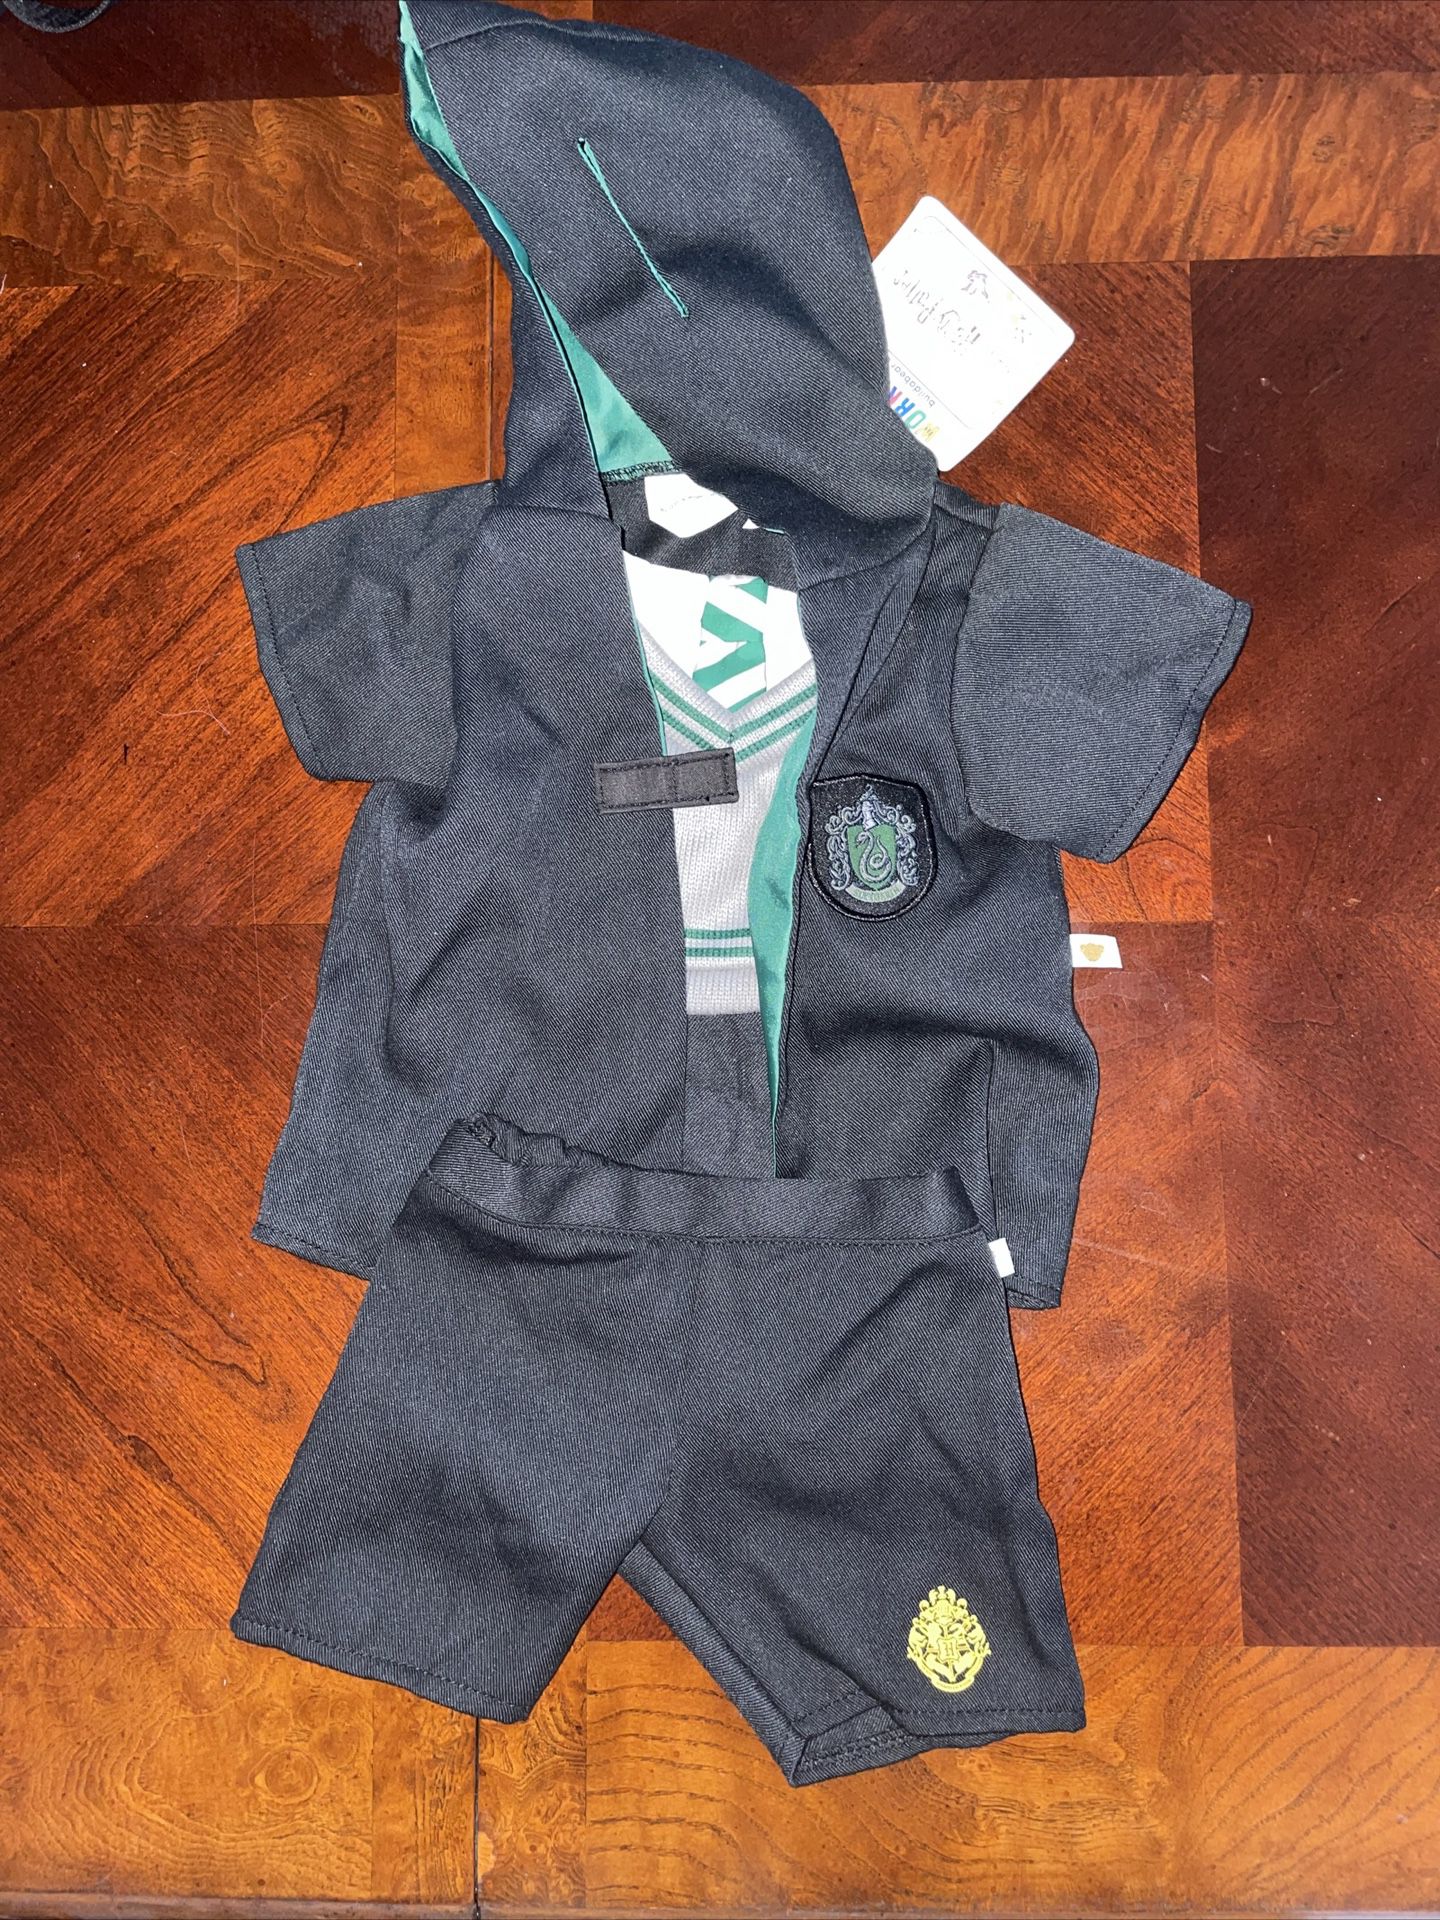 NWT Build-A-Bear Harry Potter Slytherin House Robe Uniform Top & Pants Brand New